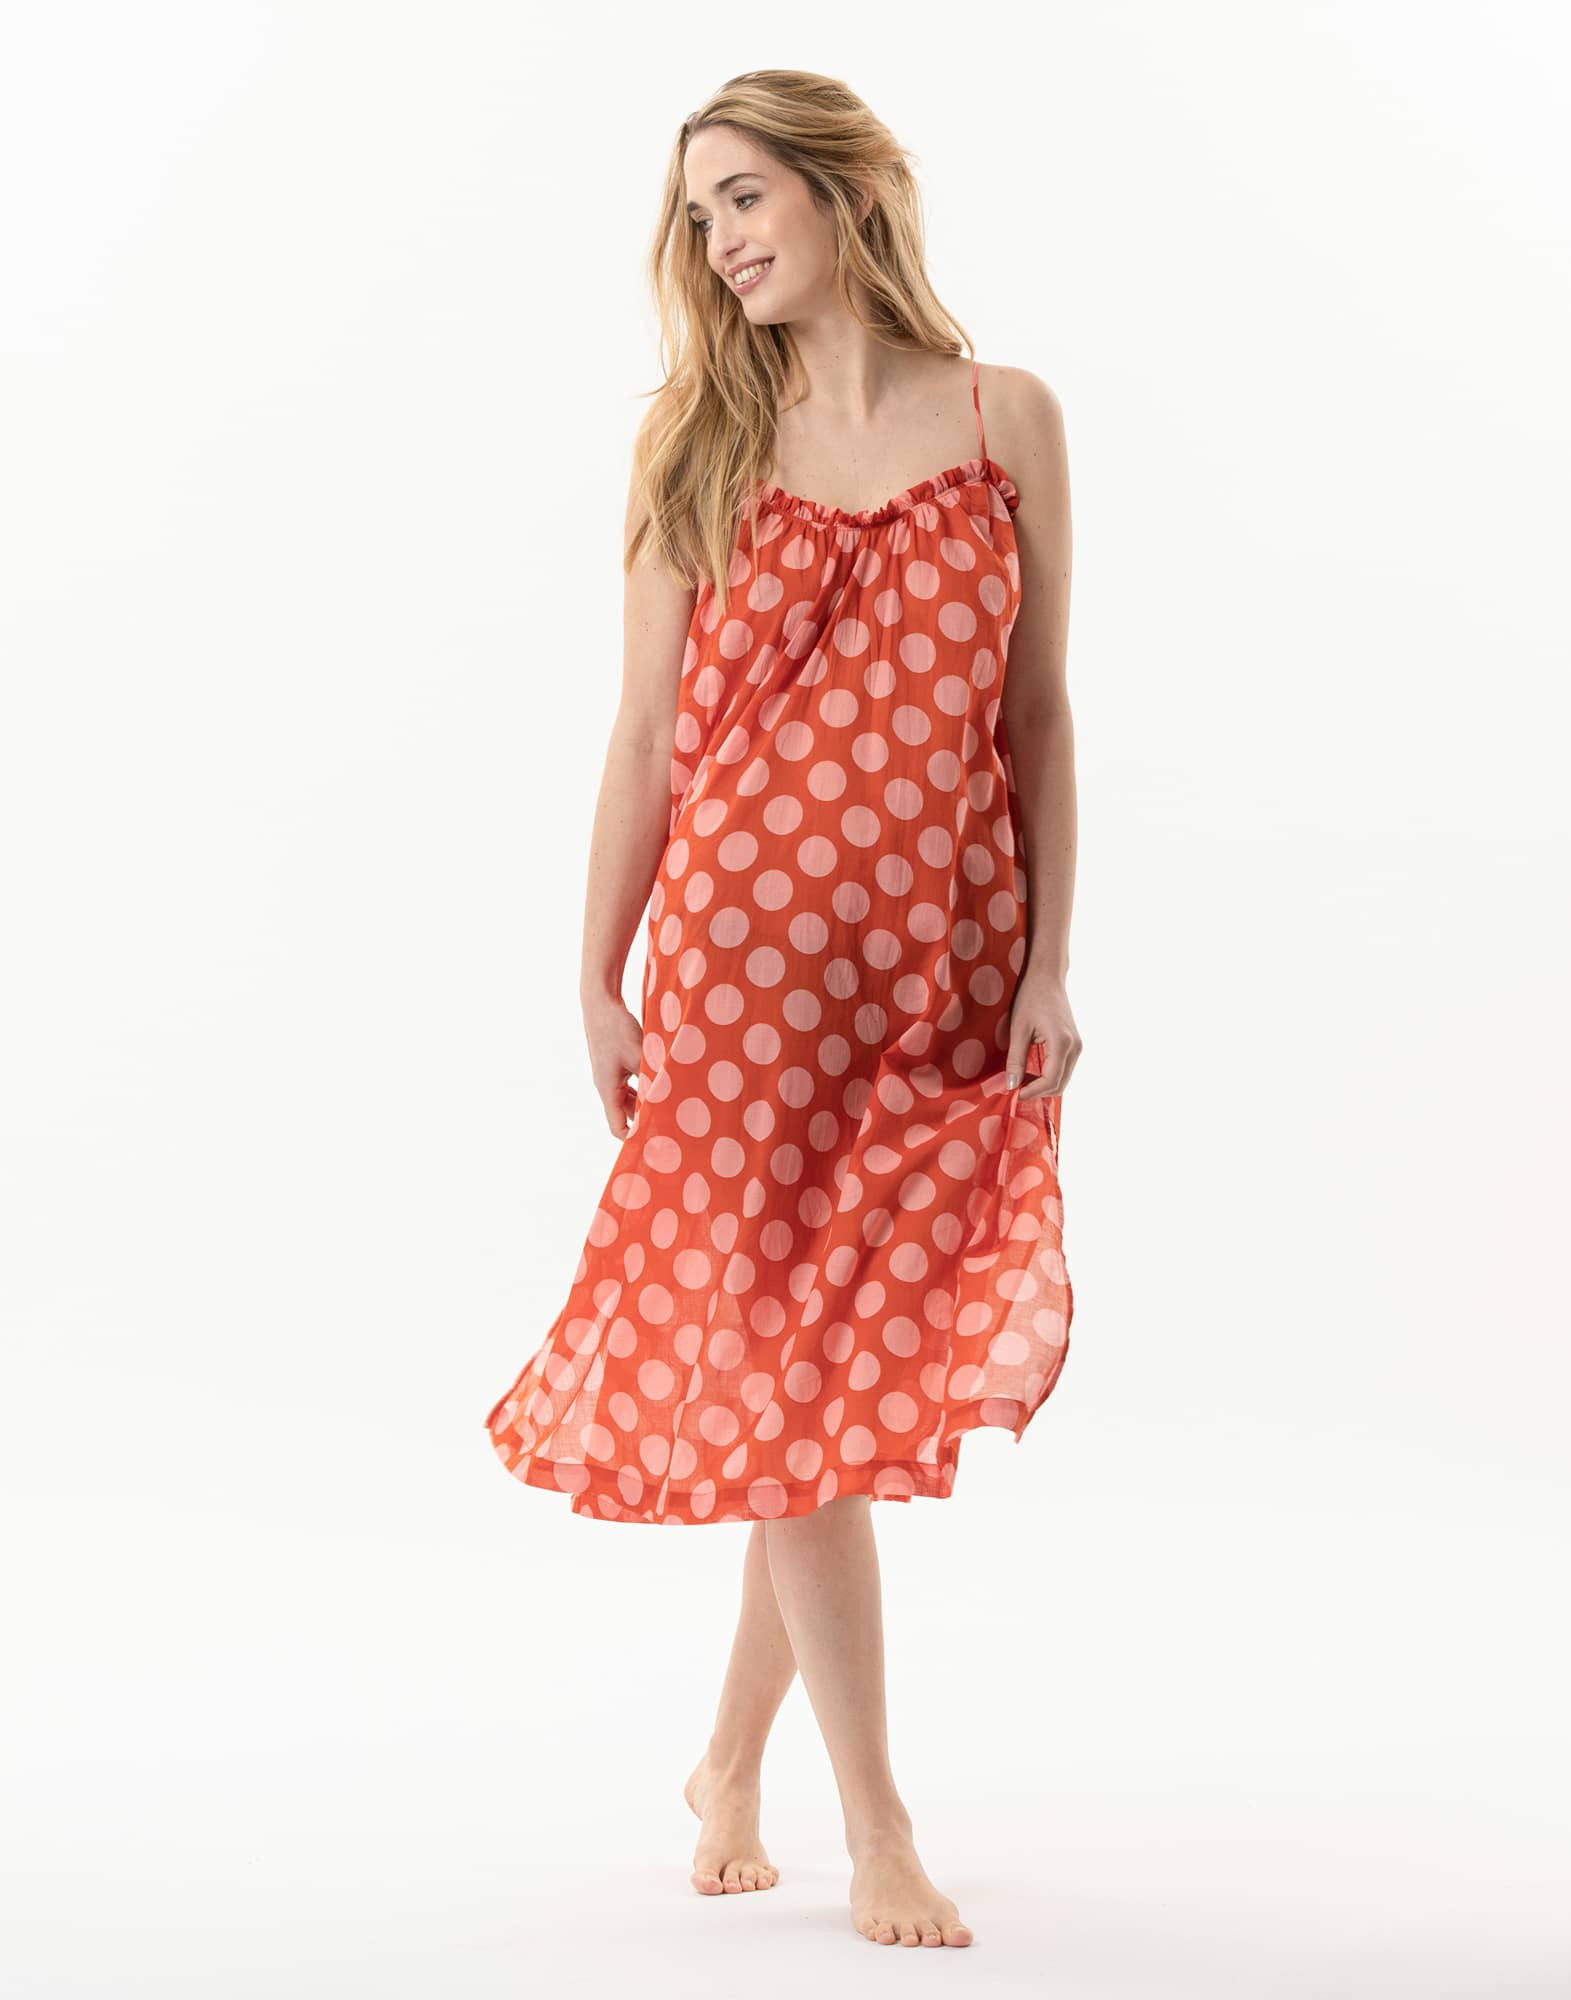 Polka dot printed dress in 100% cotton RIVA 740 pink